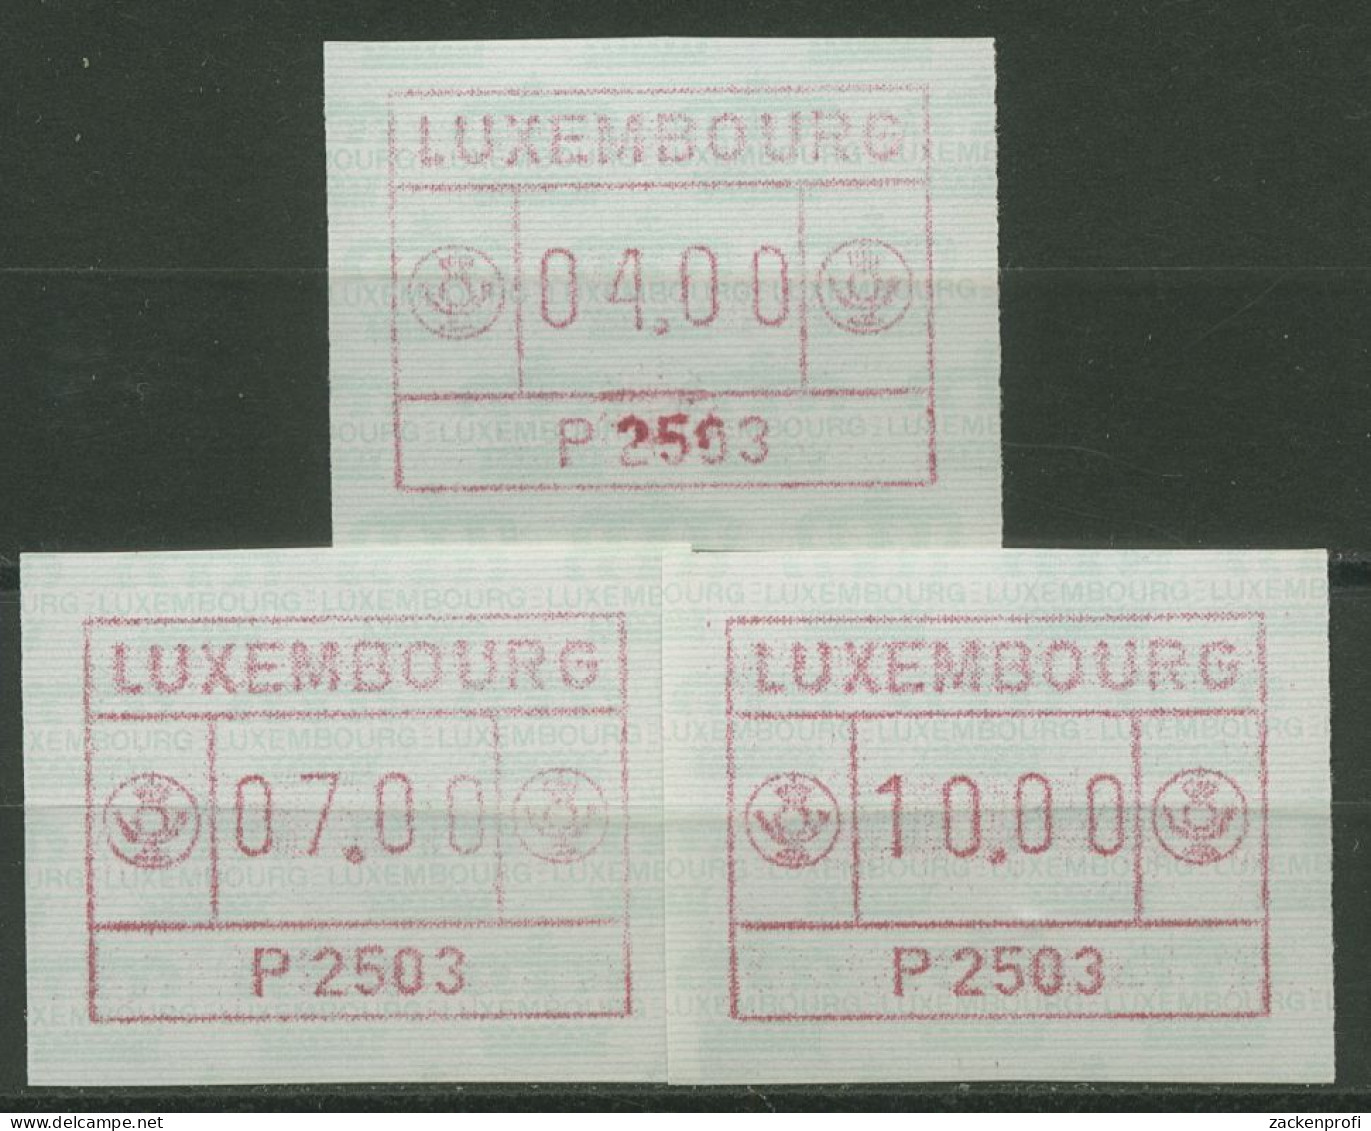 Luxemburg 1983 Automatenmarke Automat P 2503 Satz 1.3 B S1 Postfrisch - Viñetas De Franqueo